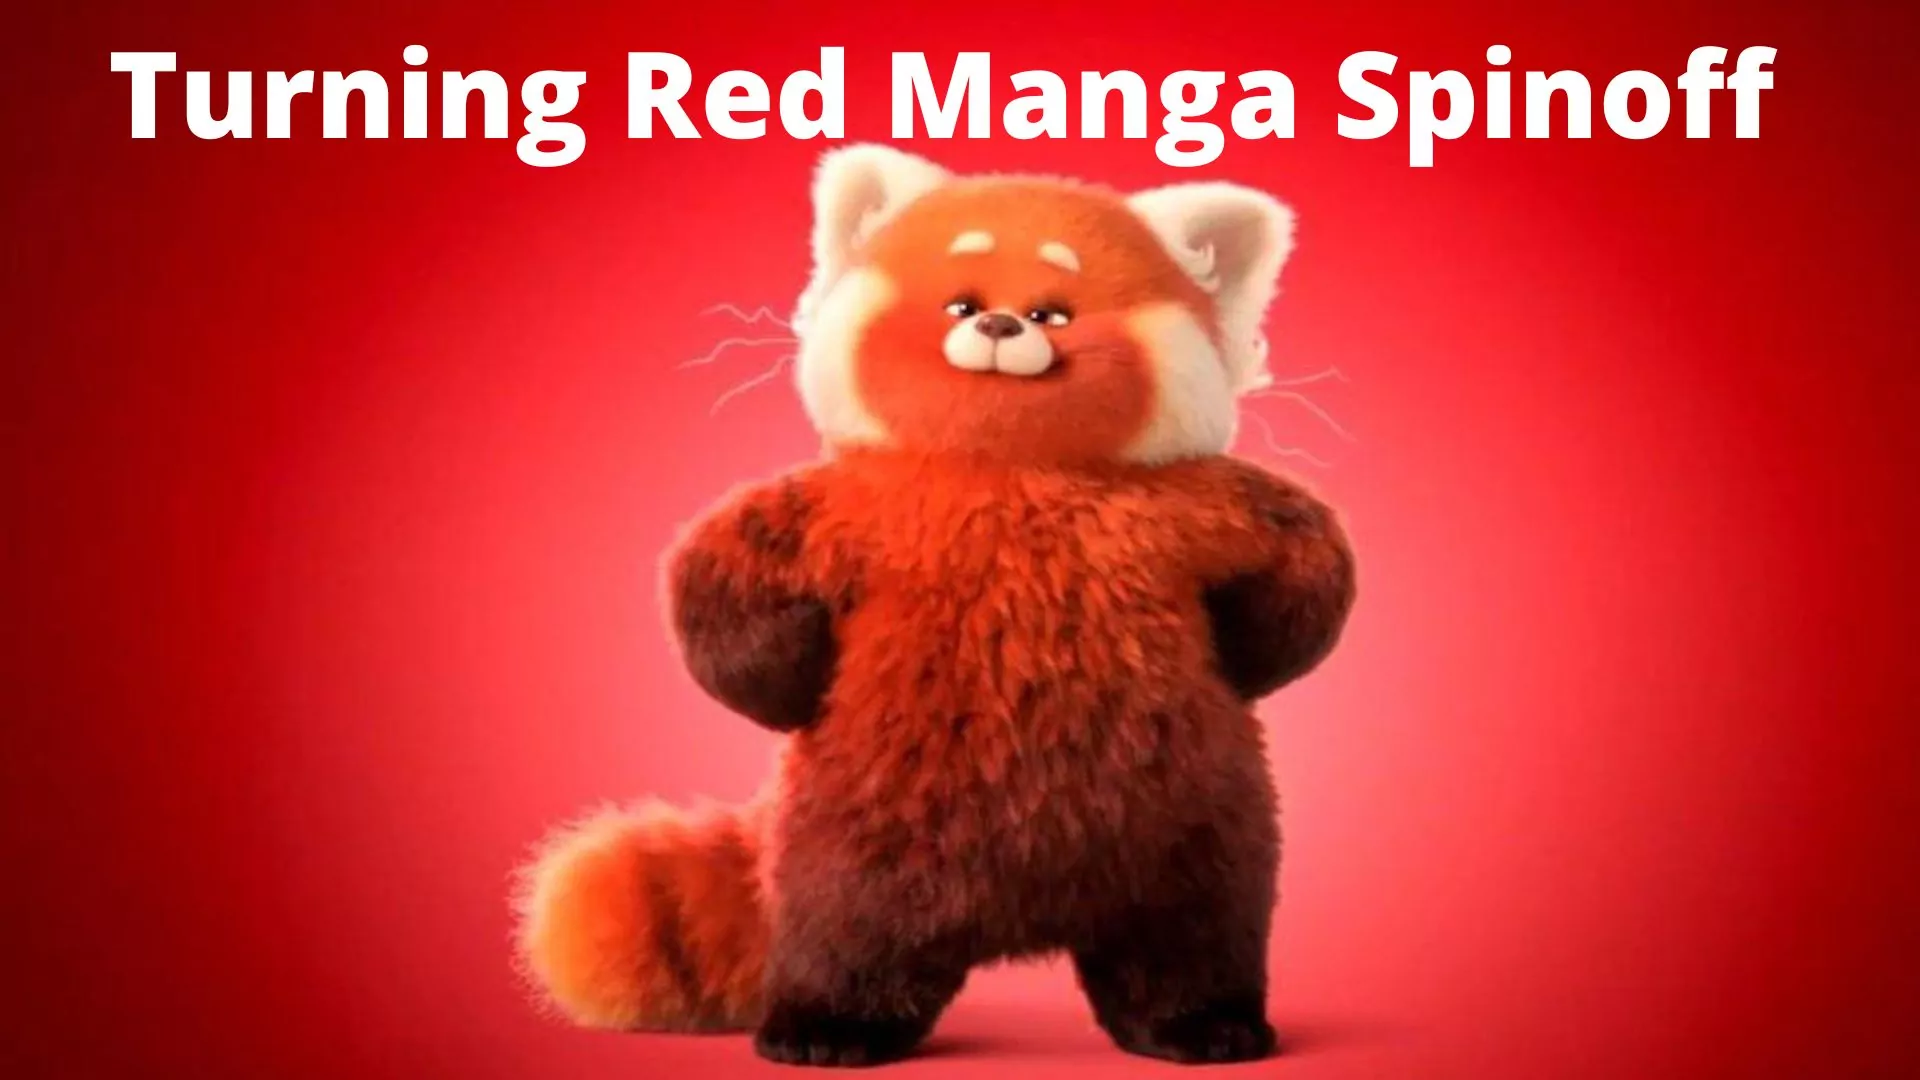 Turning Red Manga Spinoff announced by Viz Media